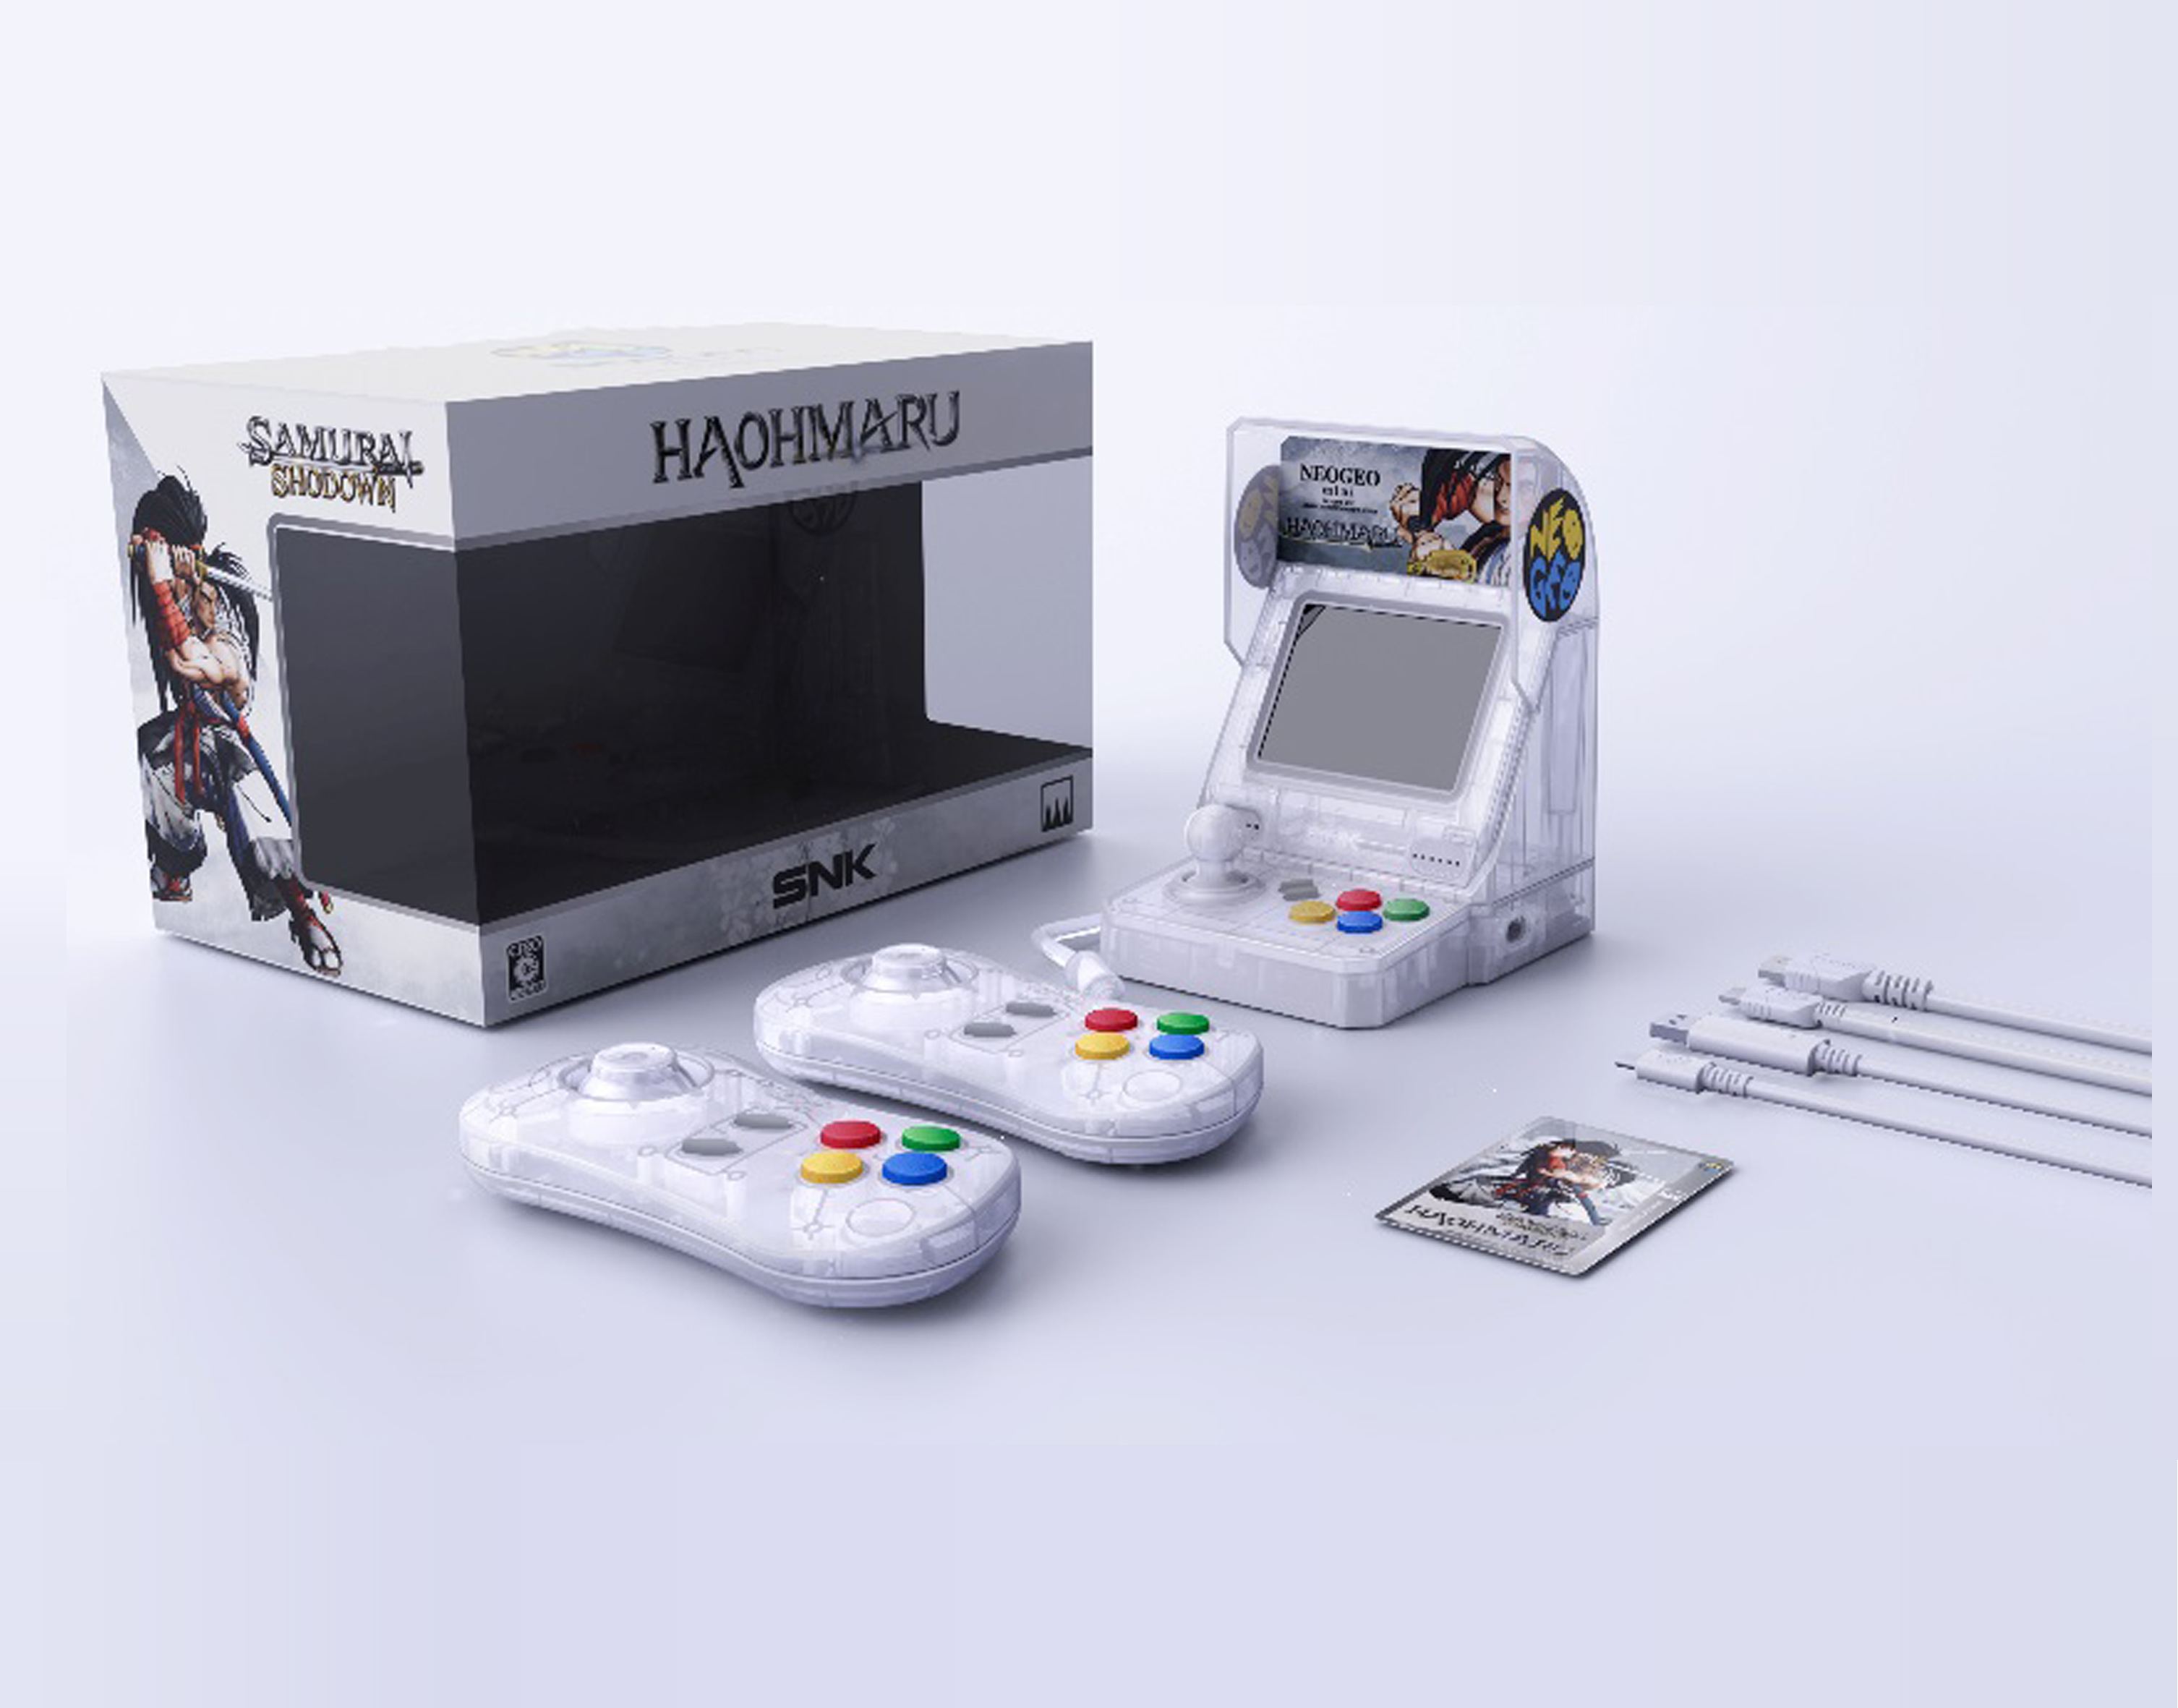 Buy SNK Neo Geo Mini for a good price